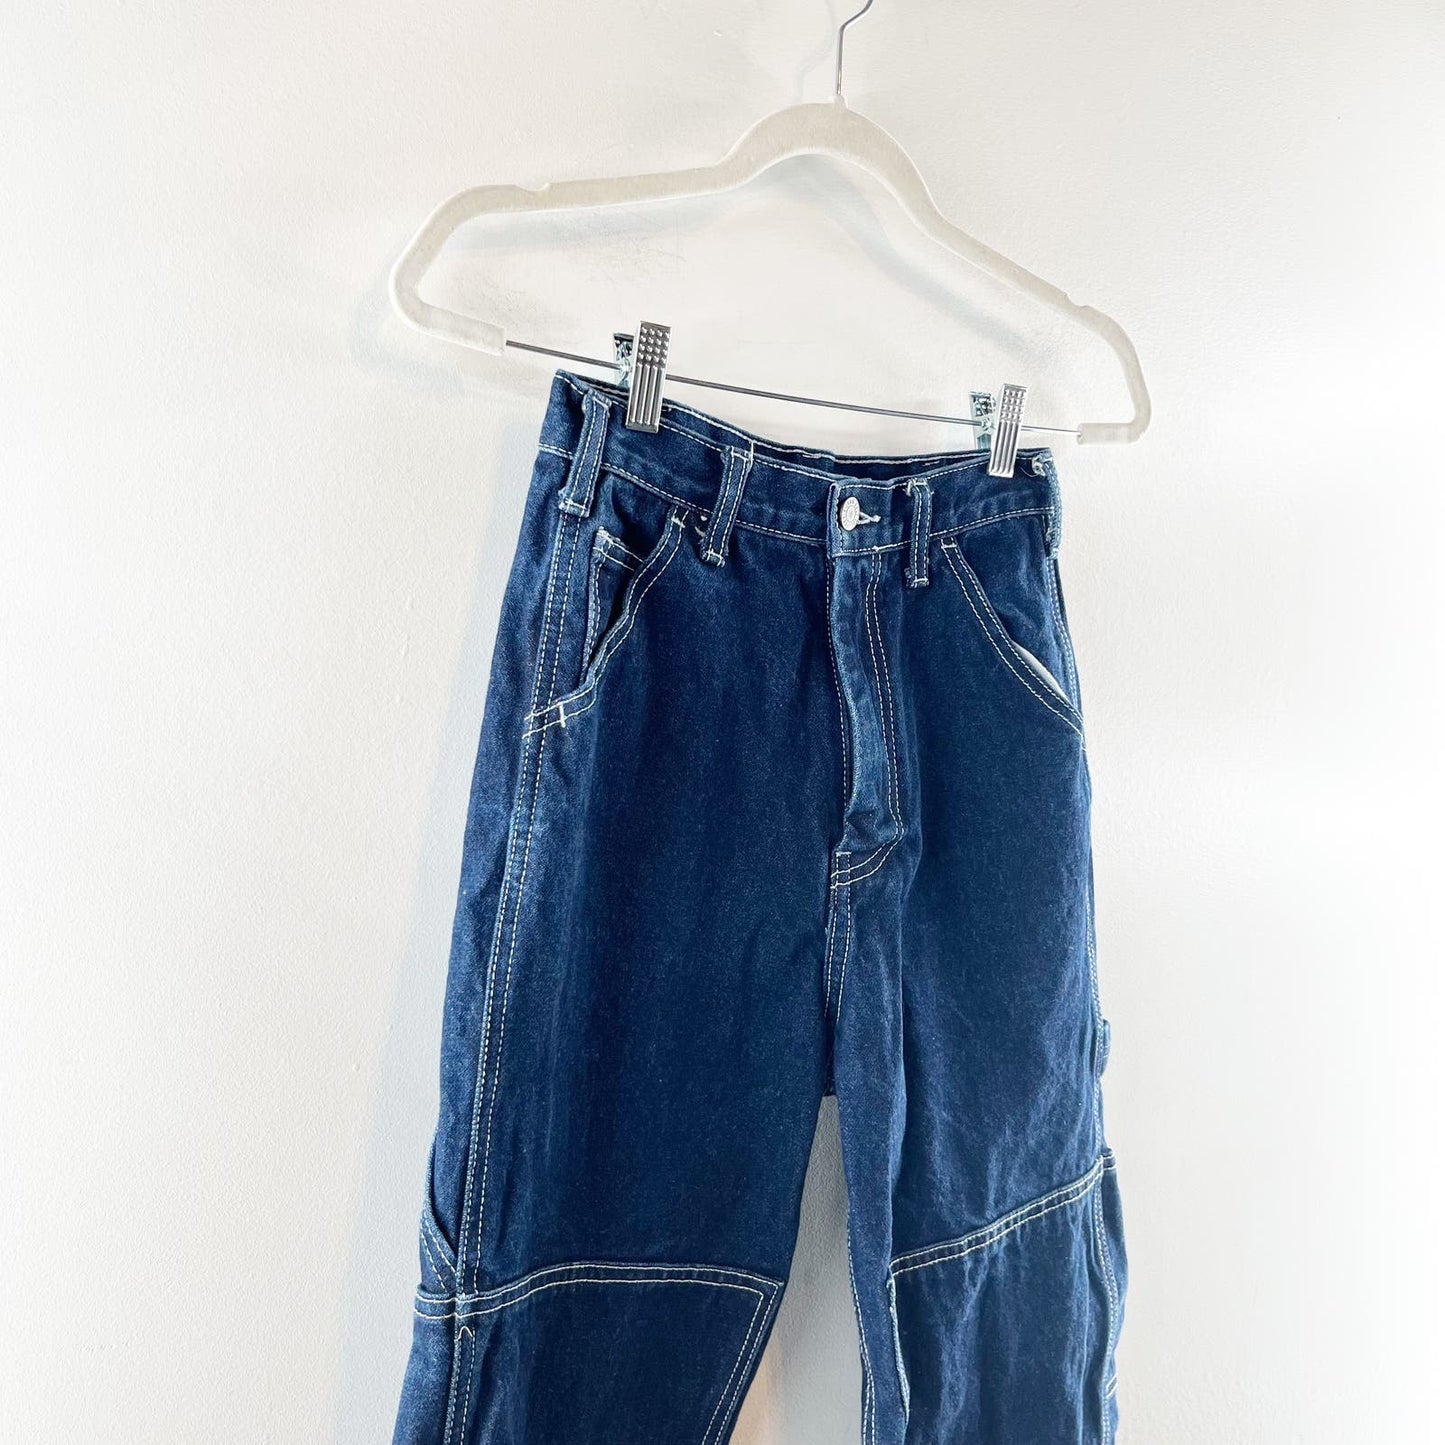 John Galt / Brandy Melville High Rise Cargo Carpenter Jeans Blue One Size